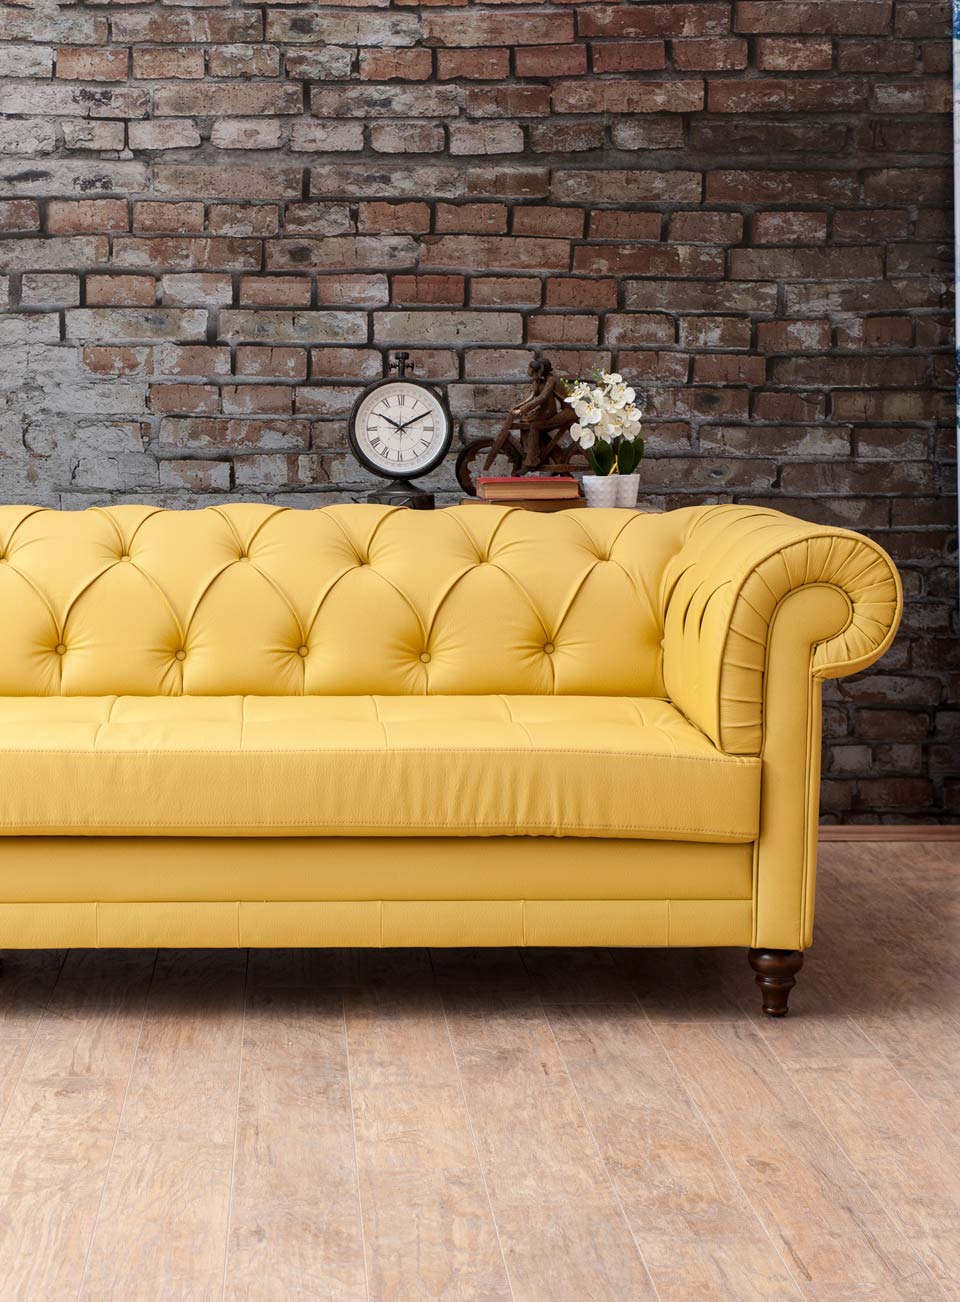 yellow sofa living room with brick wall